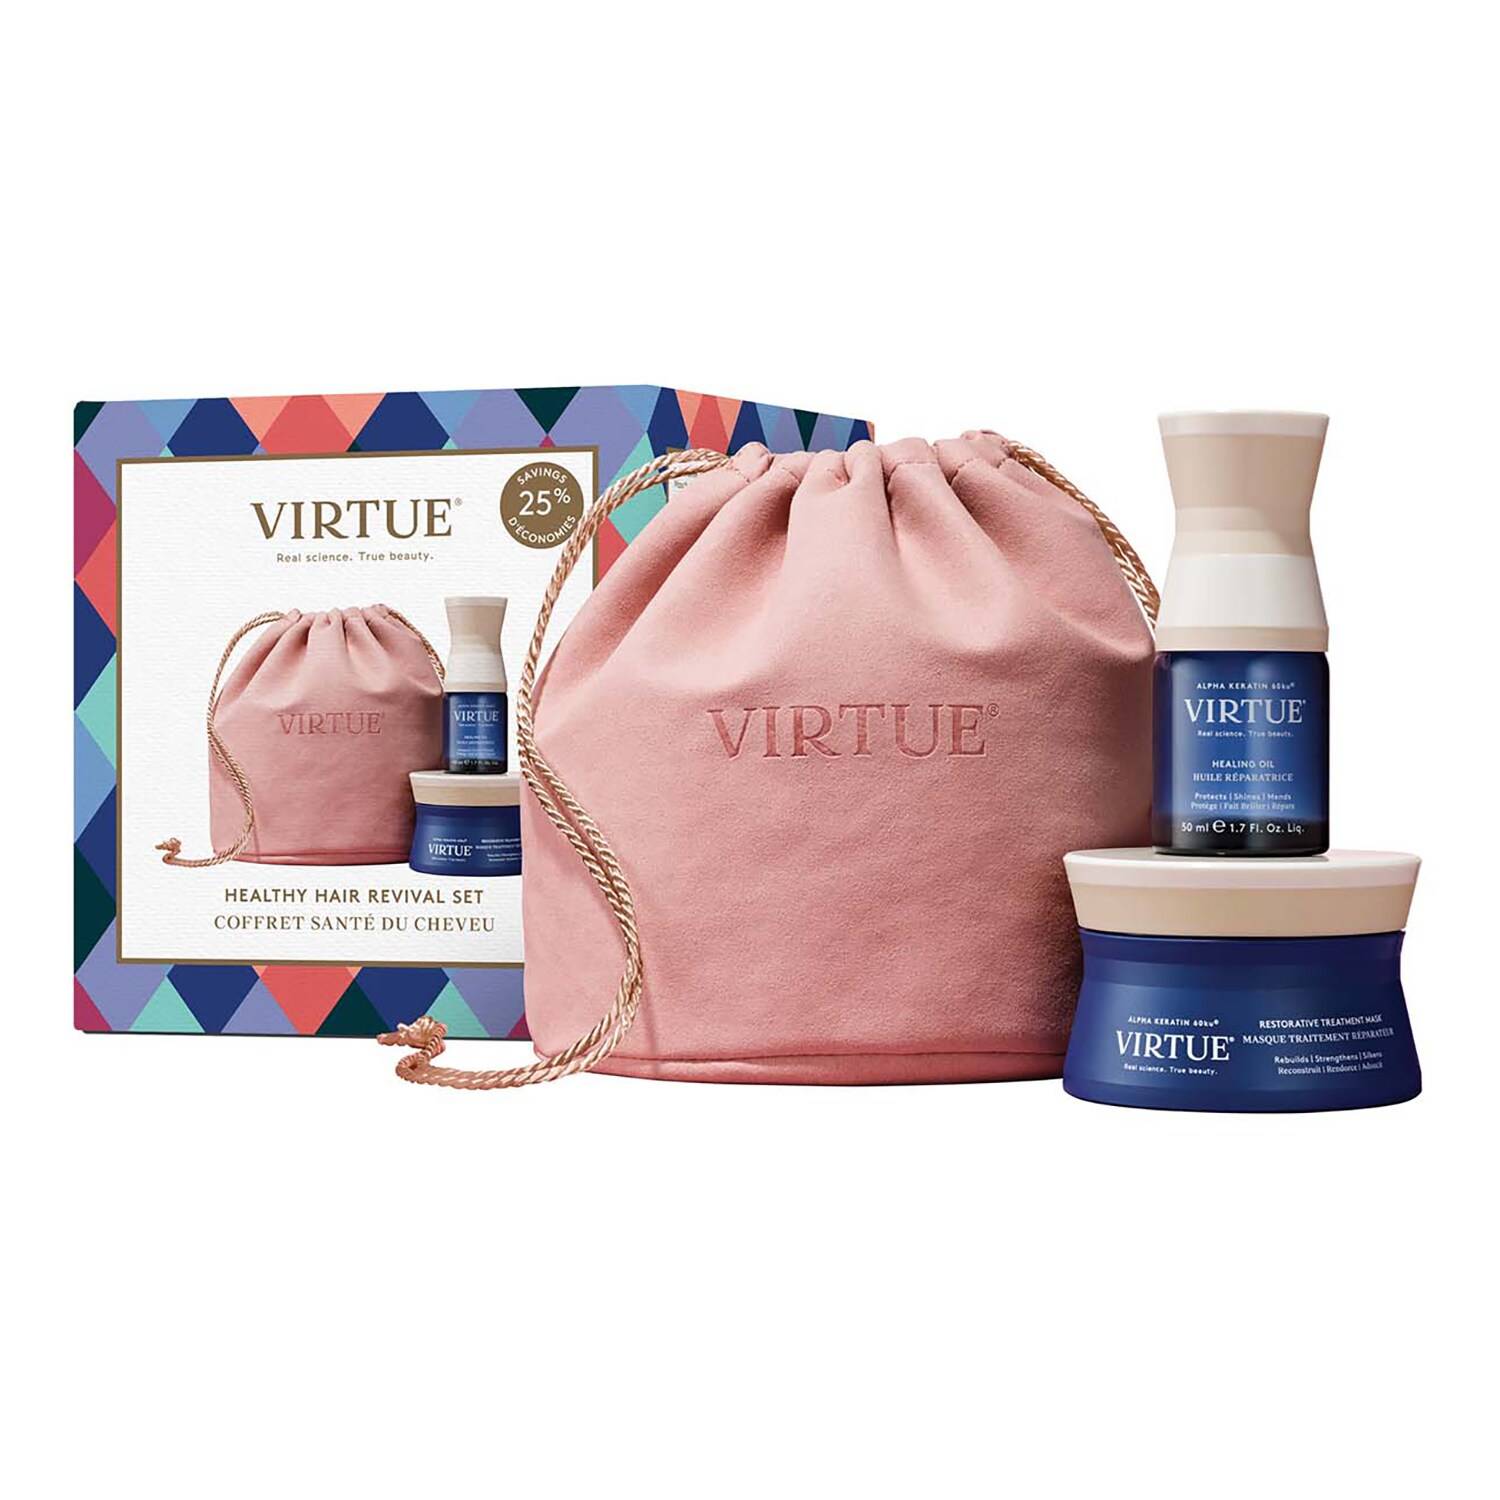 Virtue Holiday Healthy Hair Revival Kit